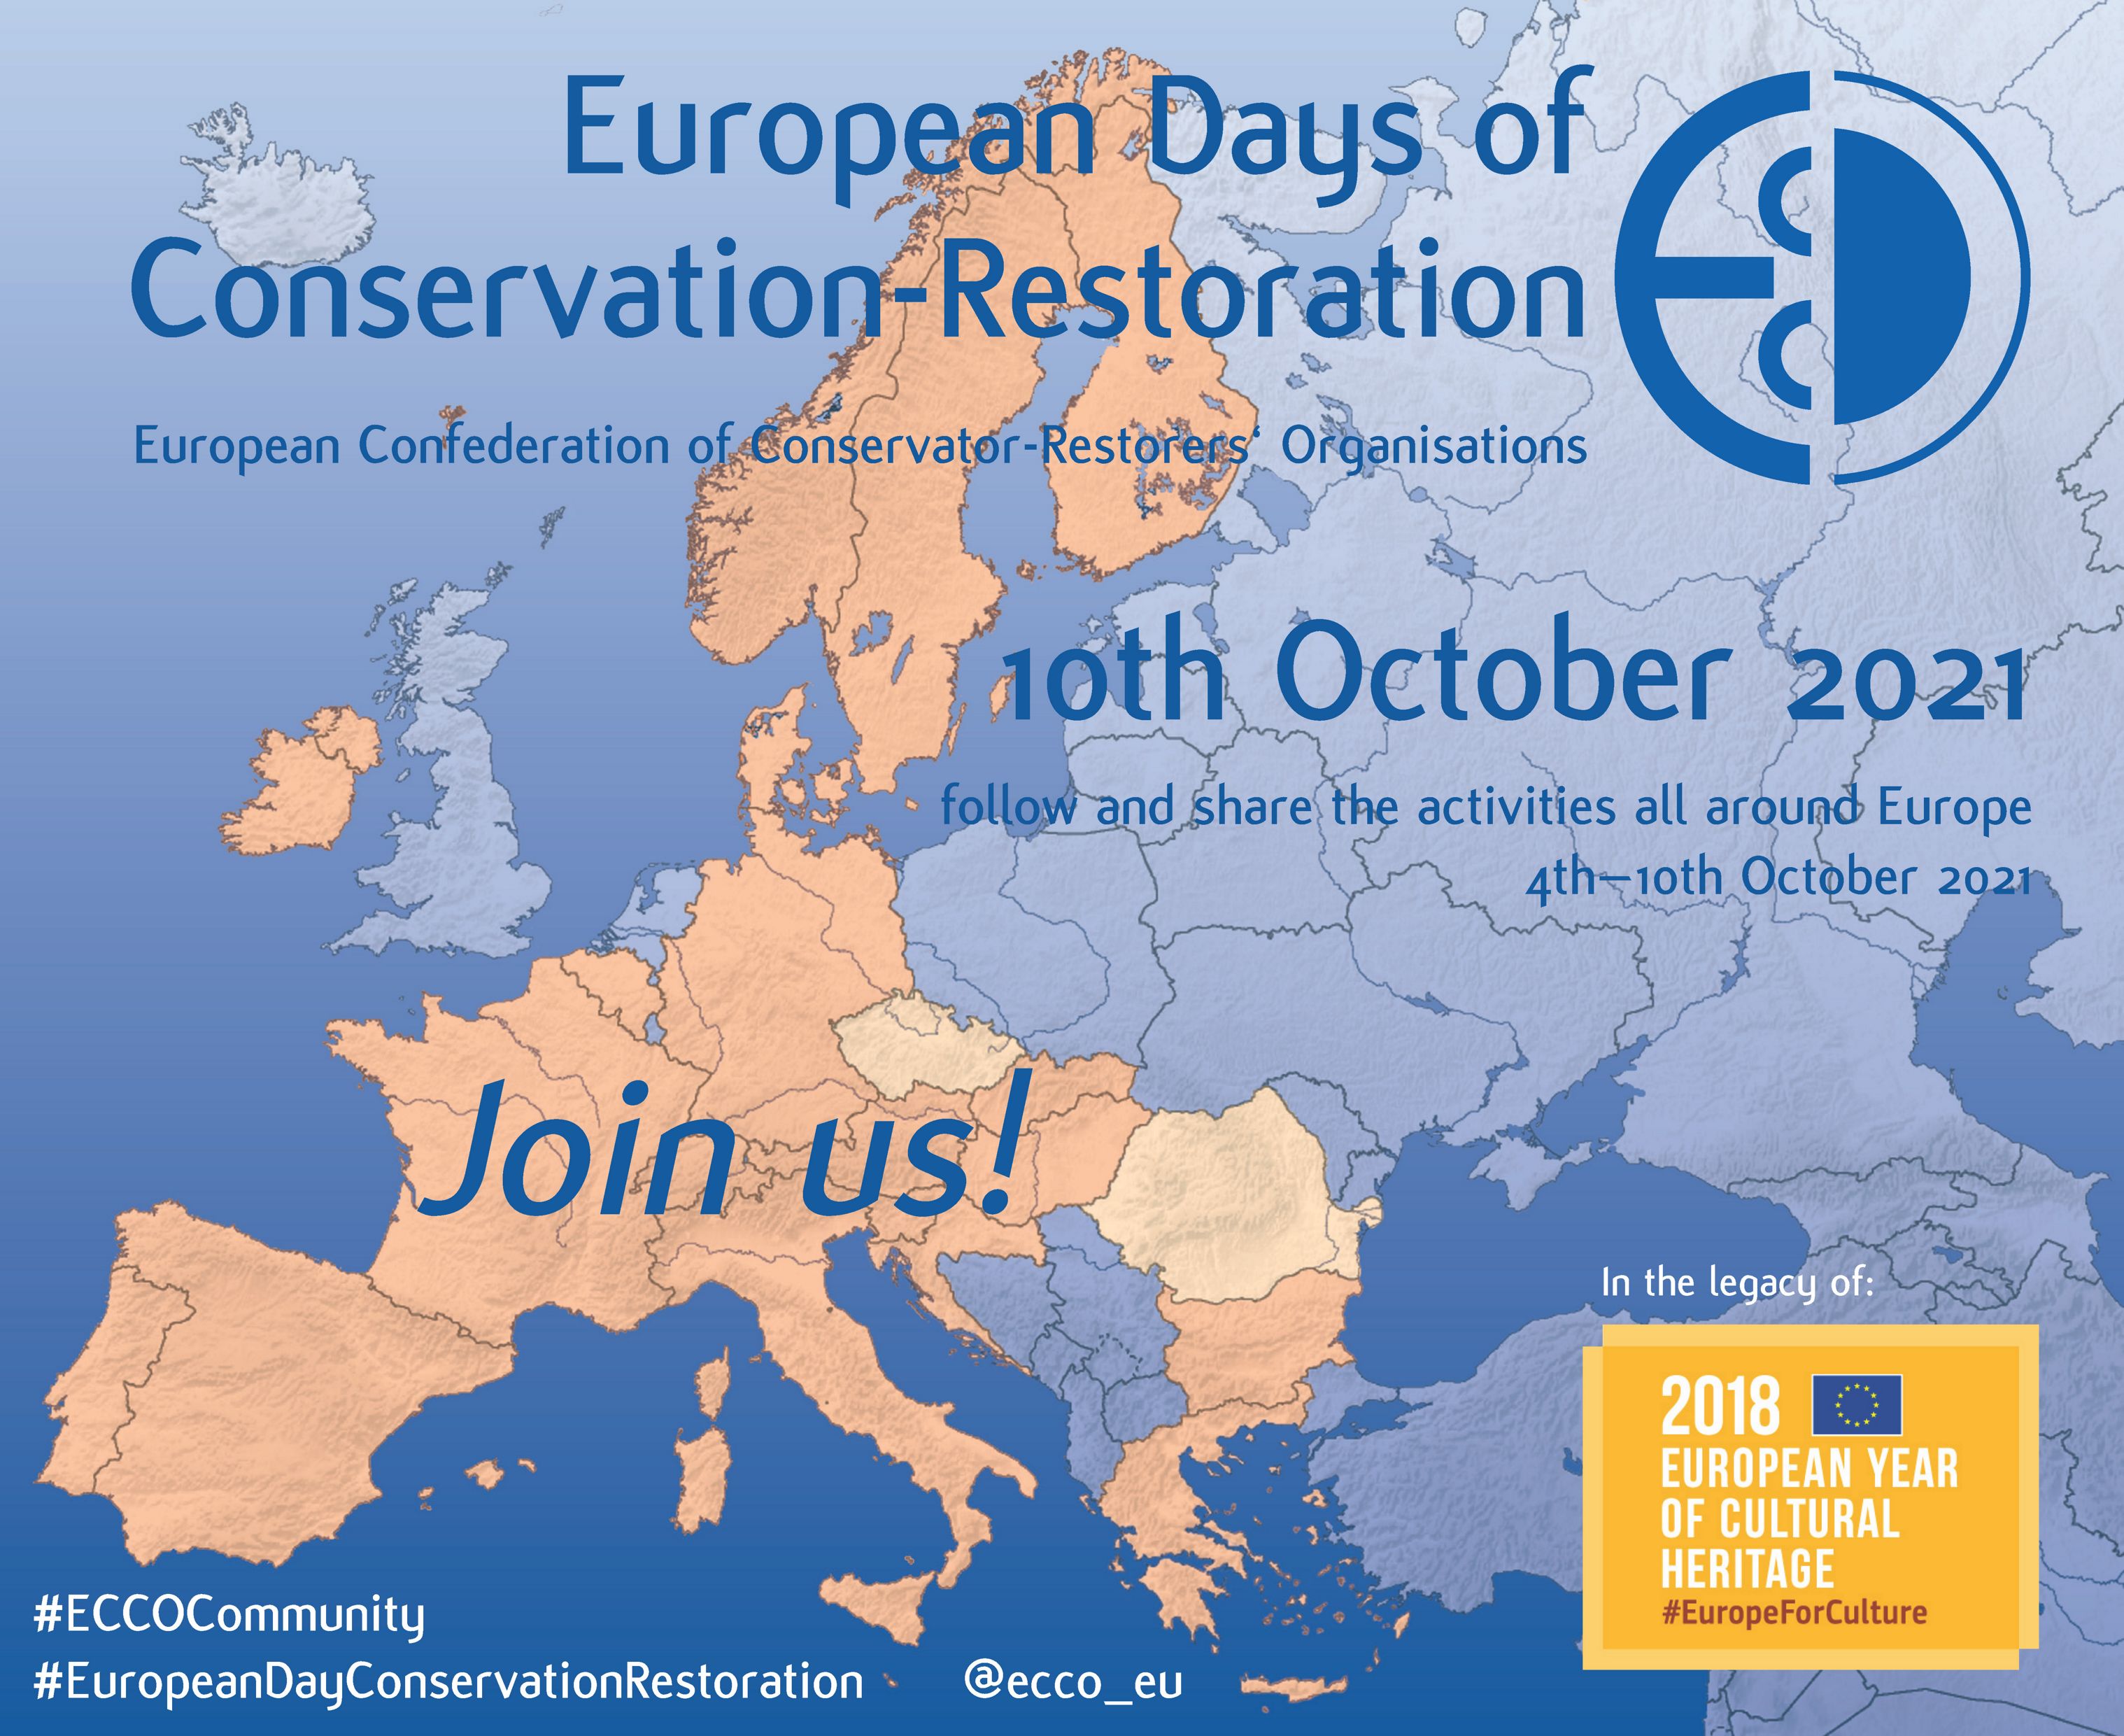 European Days of Conservation-Restoration 2021. Courtesy of ECCO